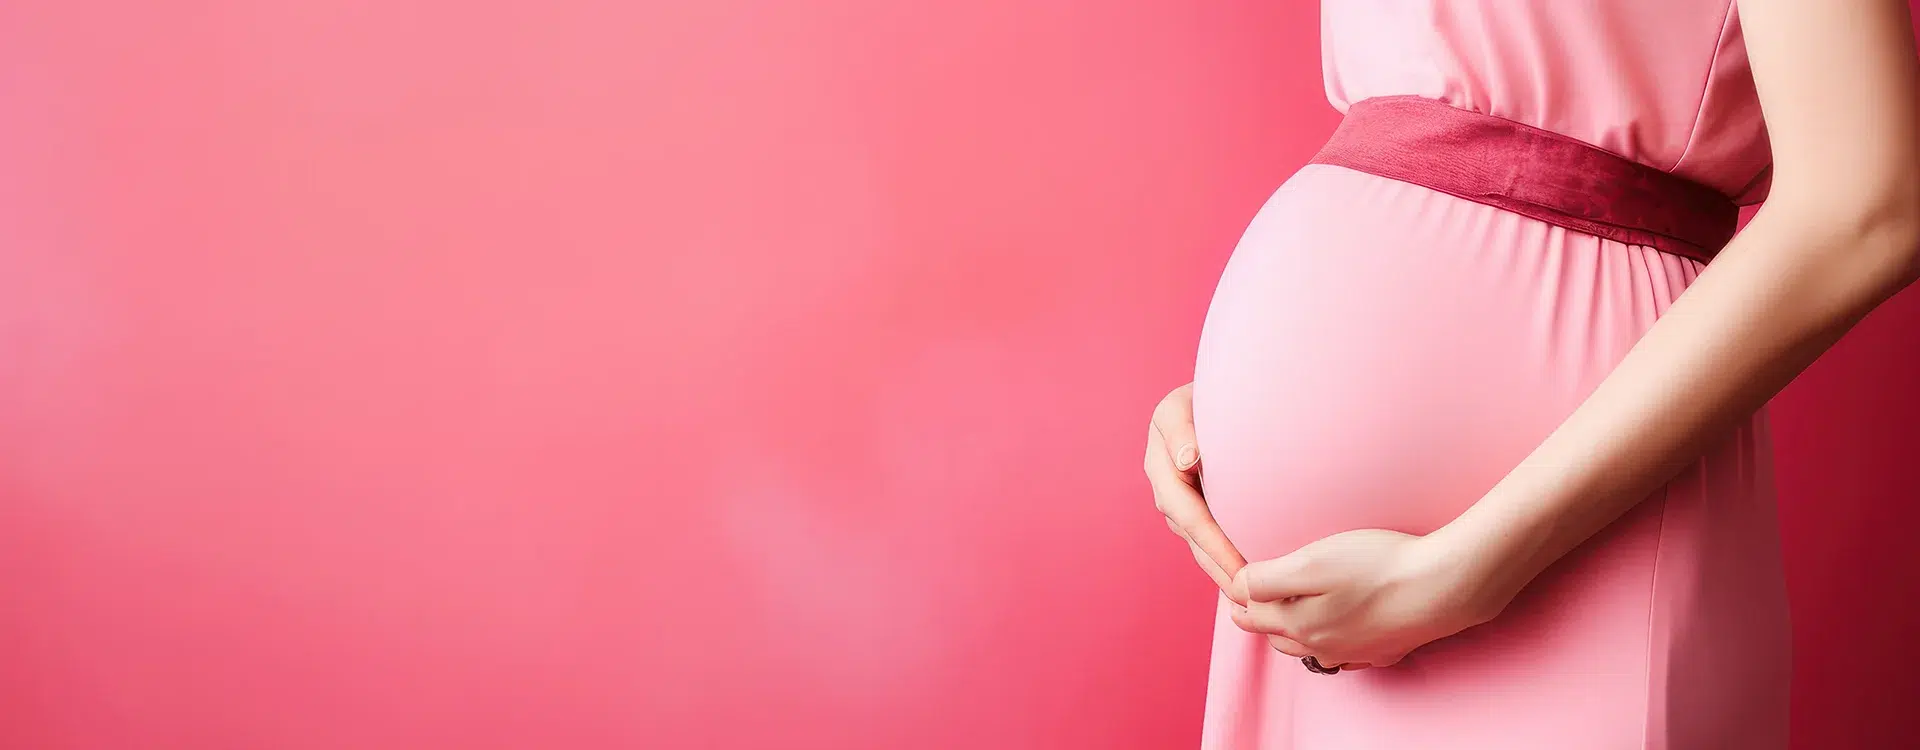 Mikronährstoffe für Schwangere | MensSana Produktkategorie